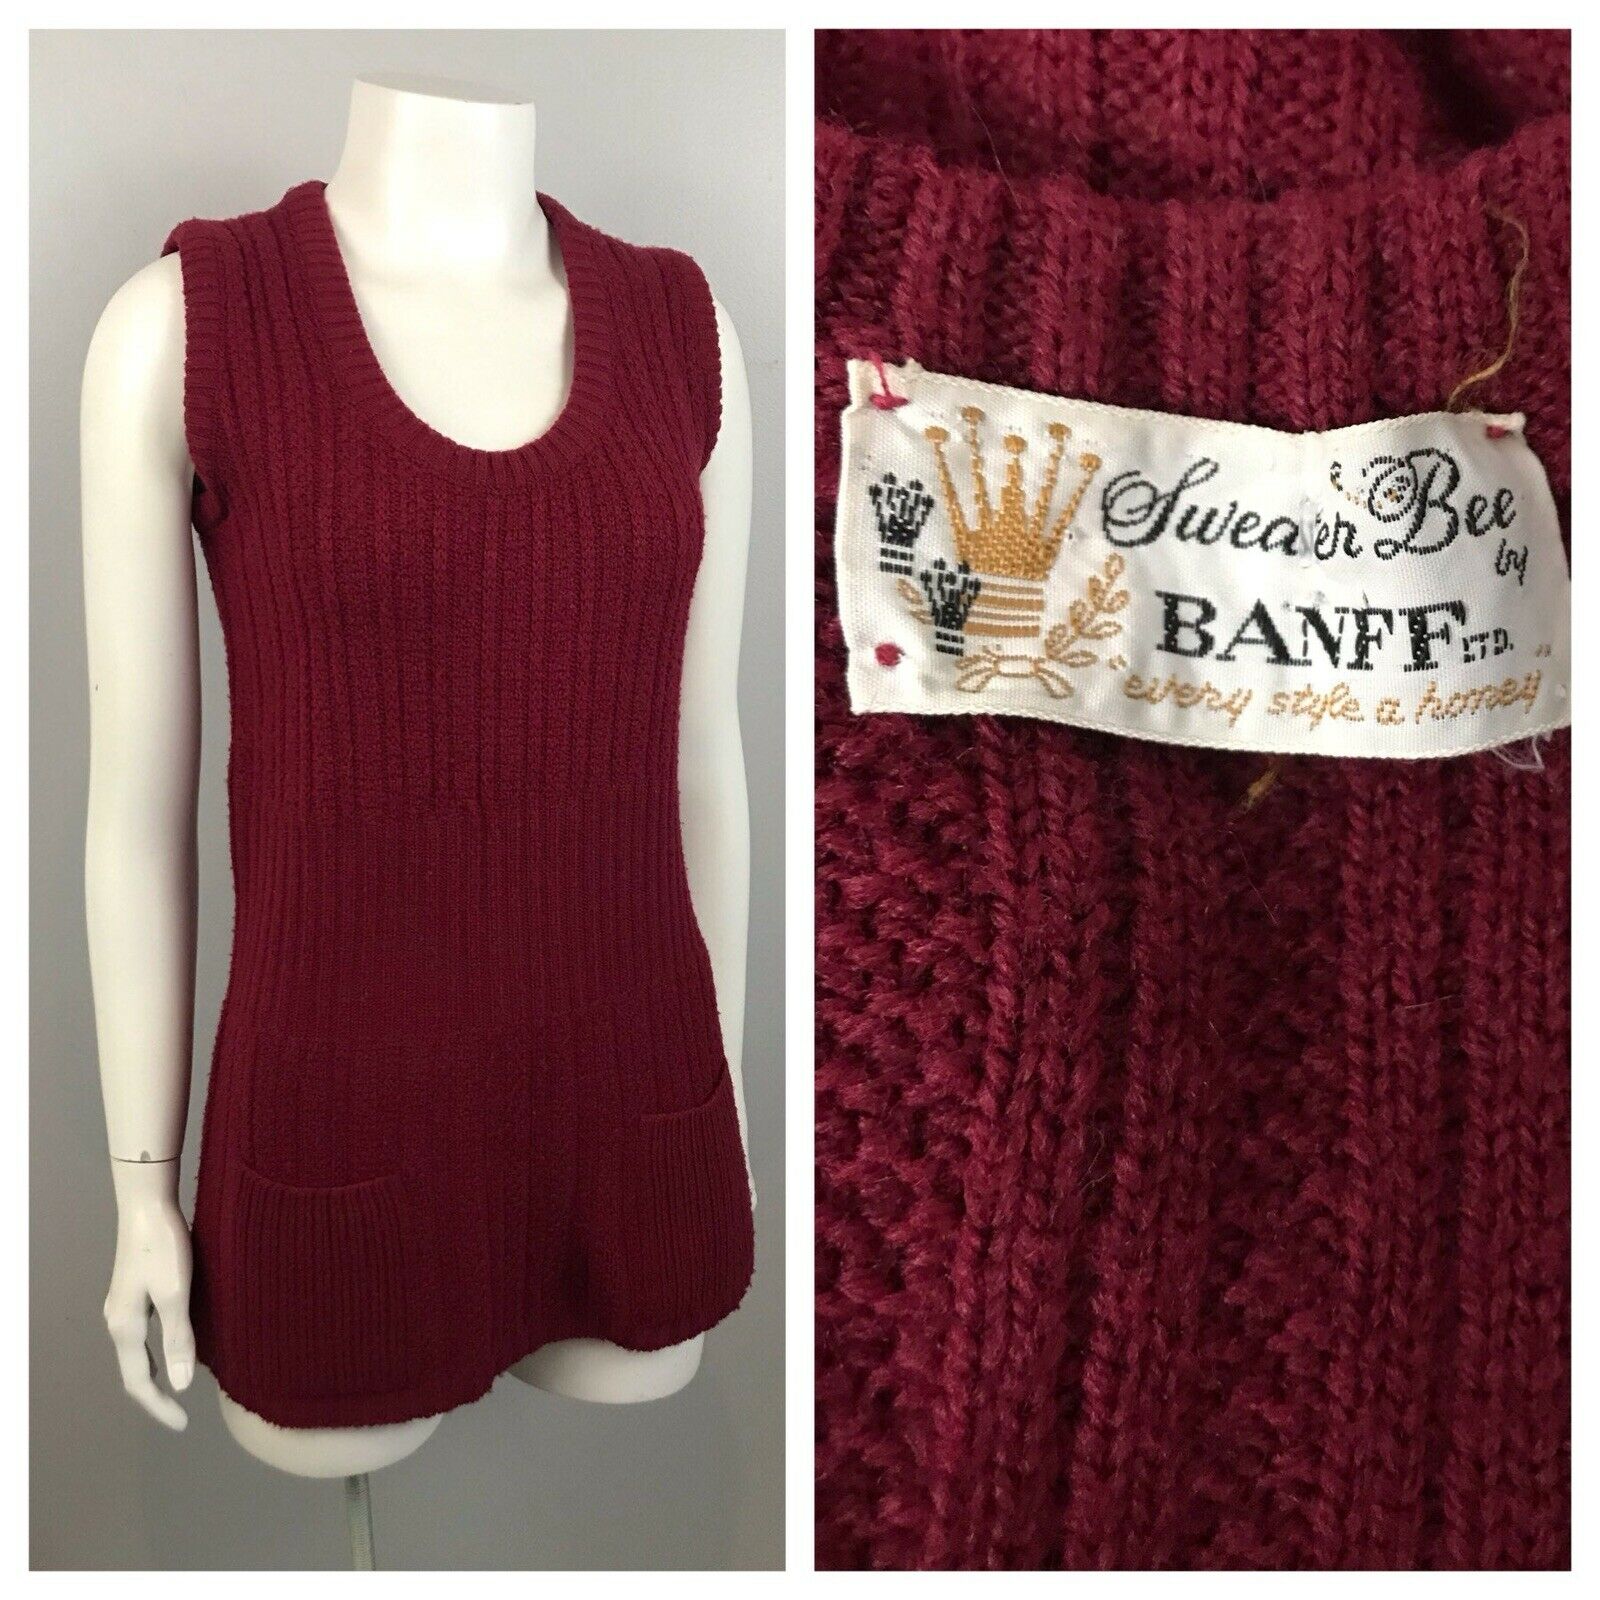 1960s Sweater Vest / Long Burgundy Sleeveless Knit Jumper Top / Medium